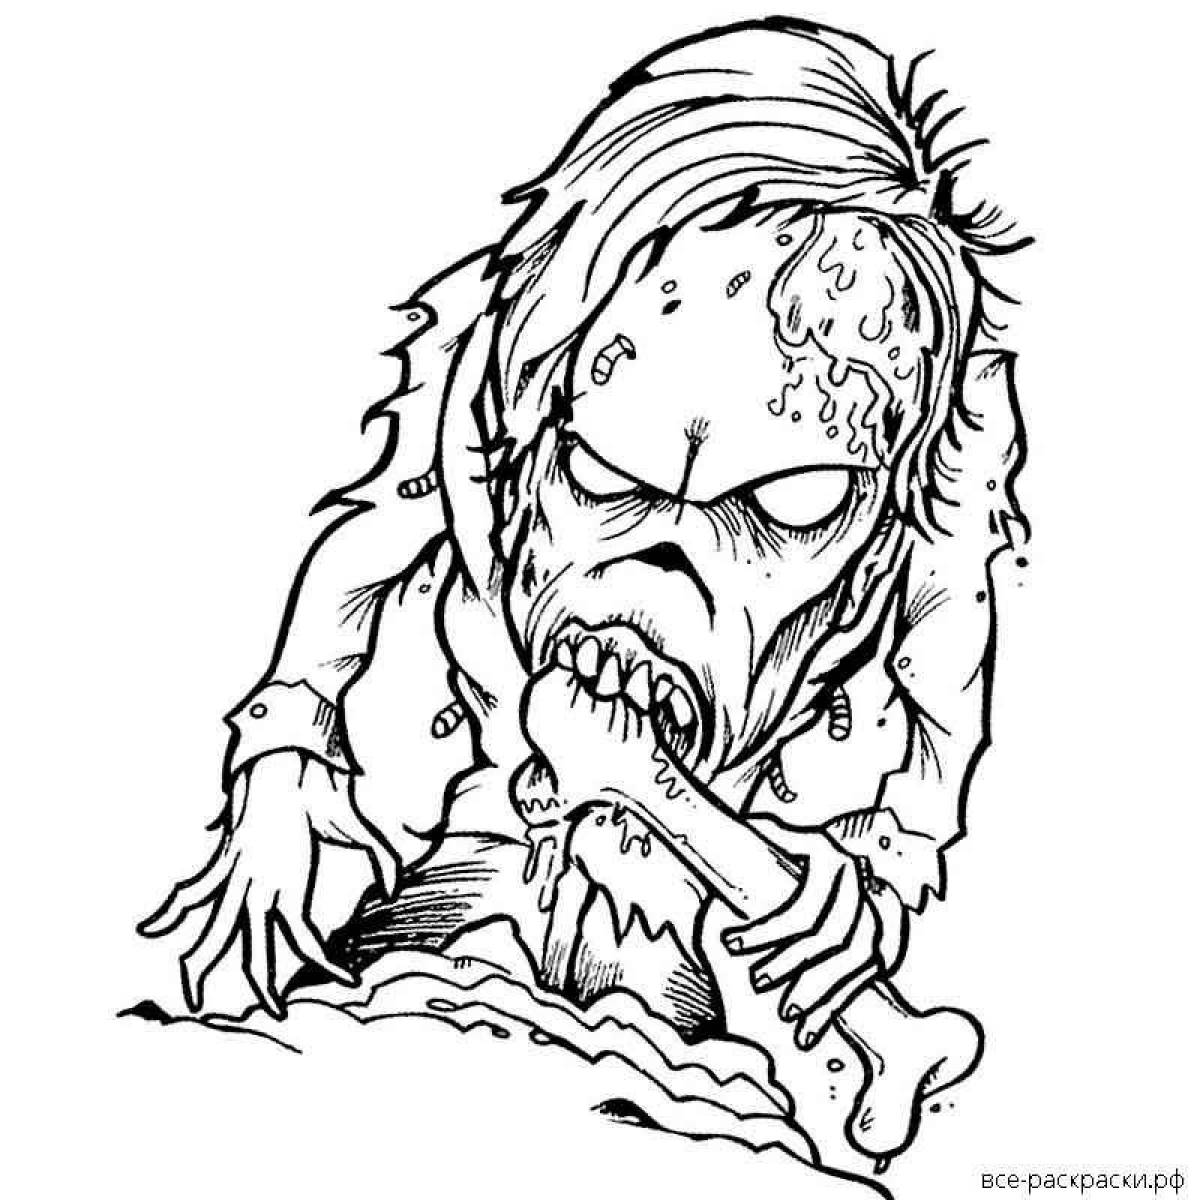 Photo Scary zombie apocalypse coloring book